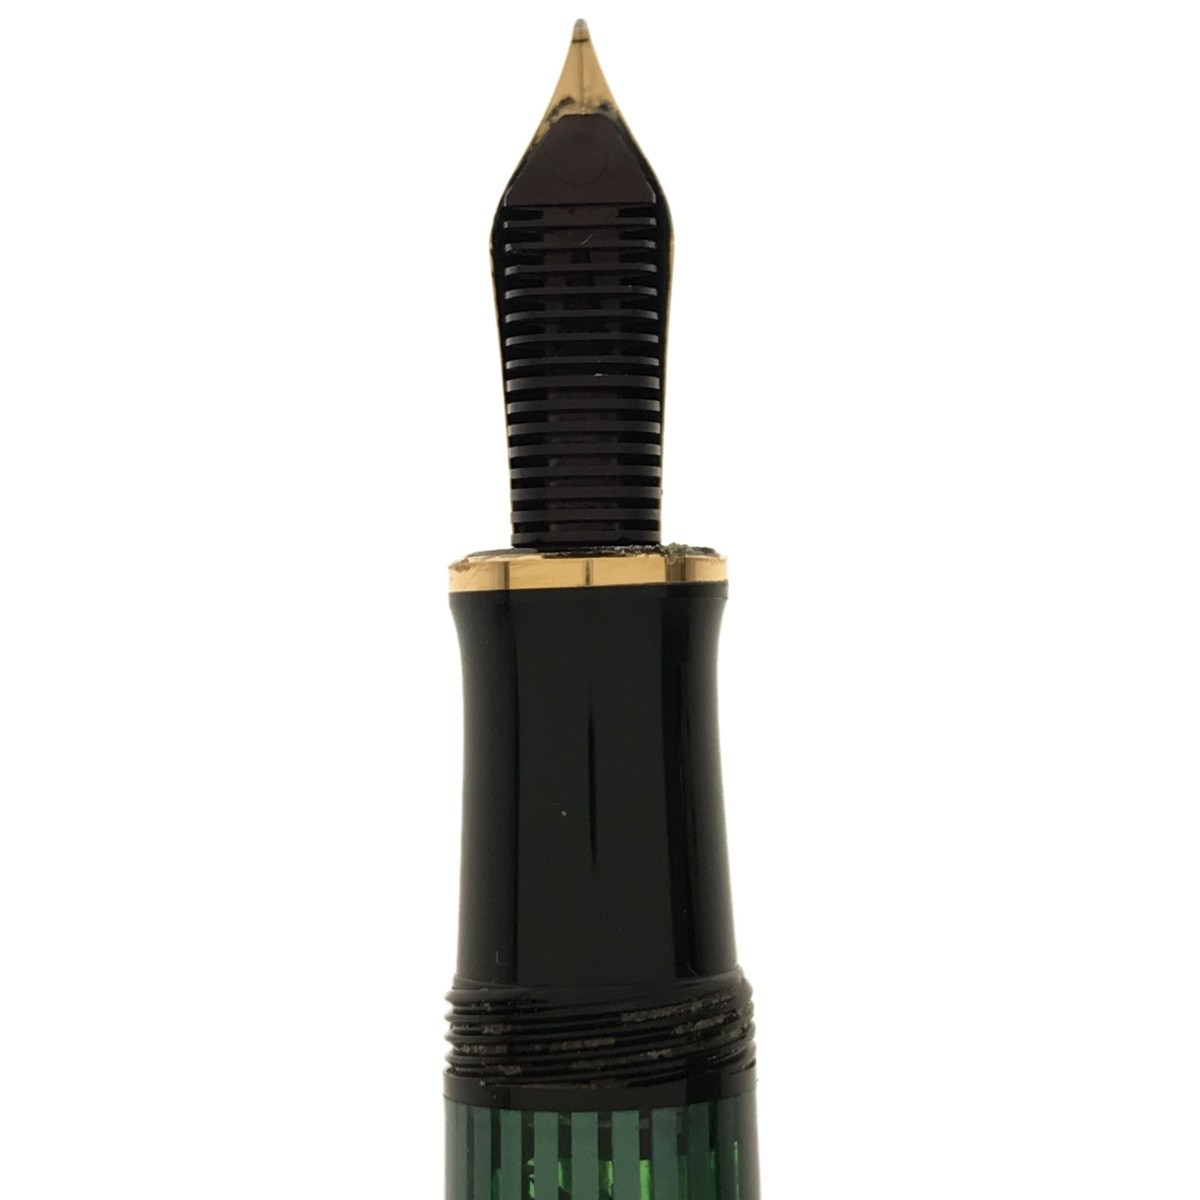 PELIKAN Souveran M400 ペリカン スーベレーン 万年筆 ブラック × ゴールド 緑縞 ペン先14C 585 F 刻印 筆記用具 ドイツ製 文房具 J825 - 6